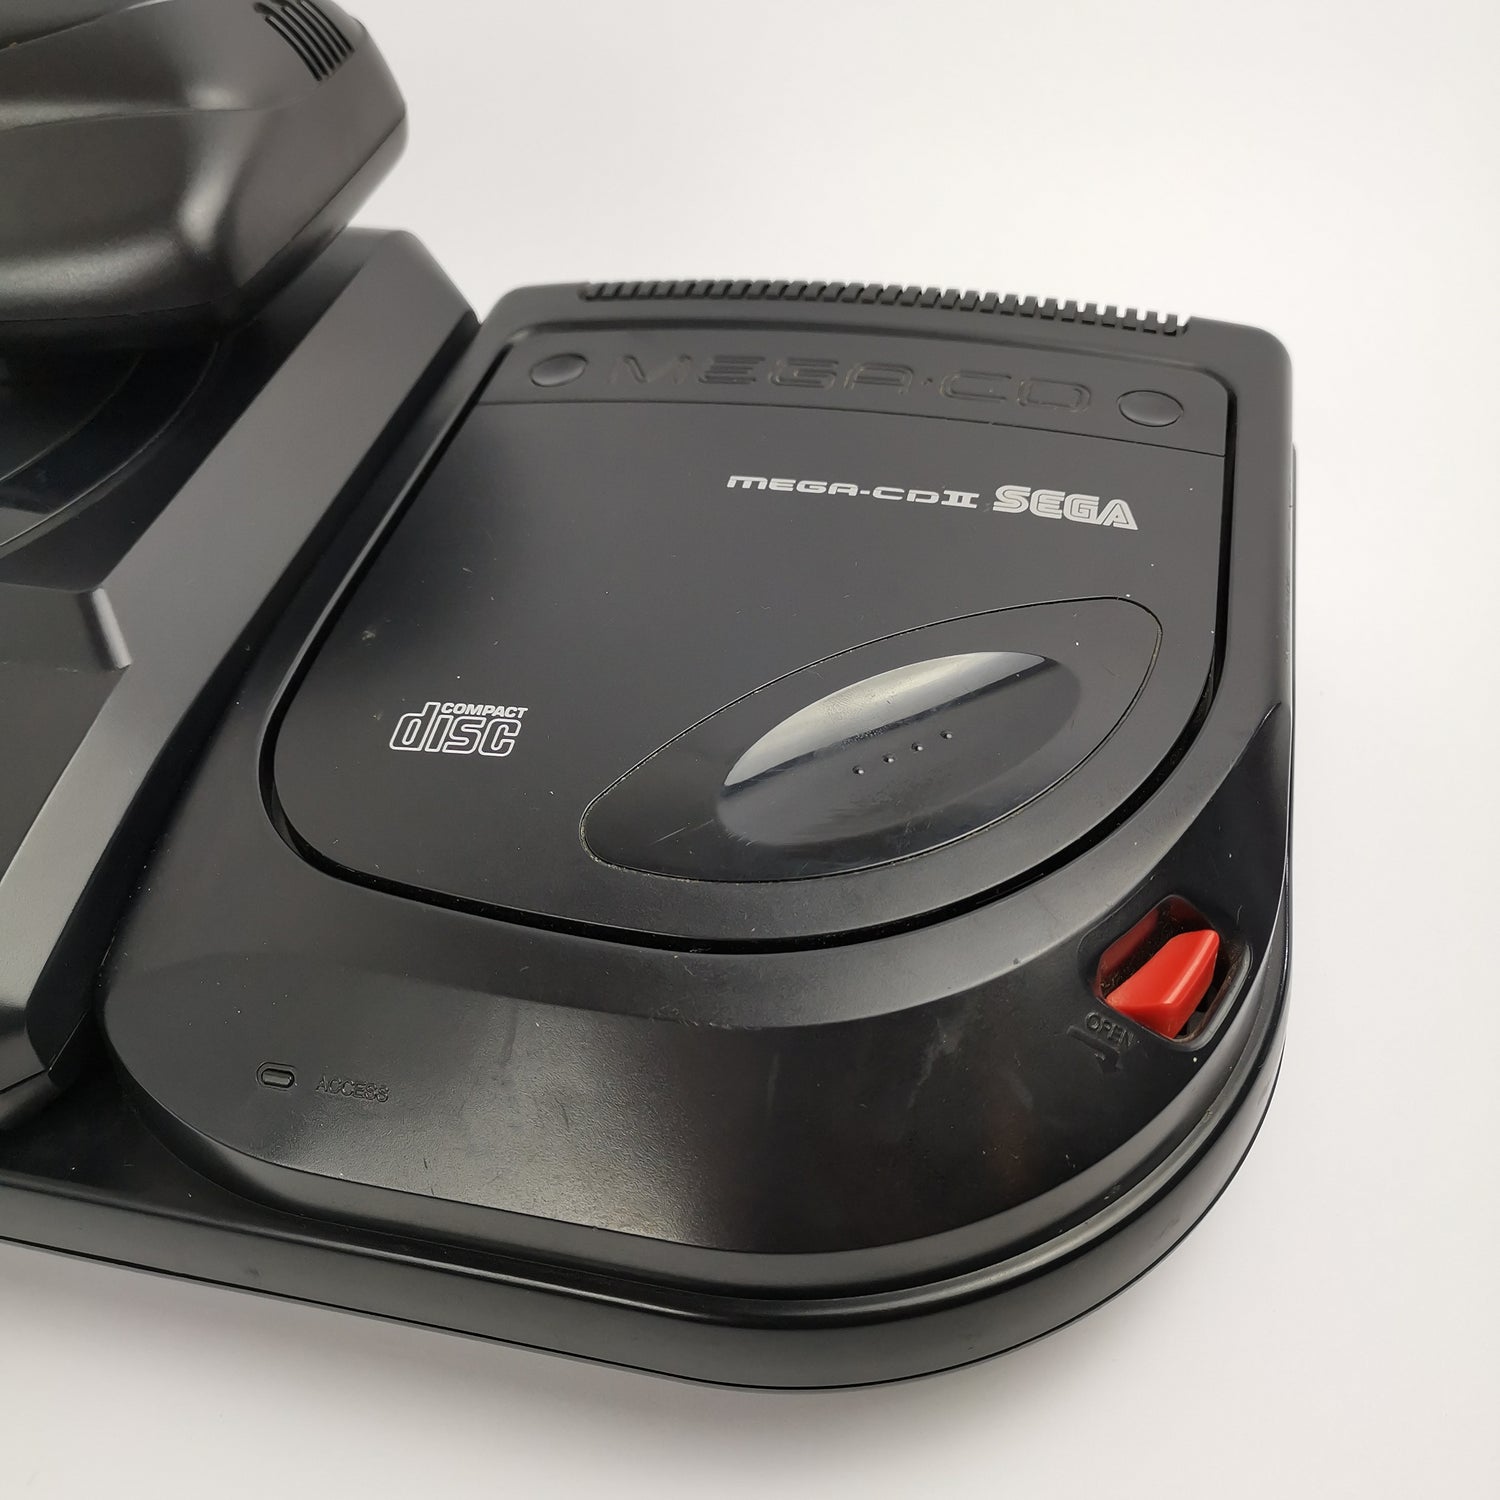 Sega Mega CD console with 32x adapters and 2 controllers | Mega CD Console PAL